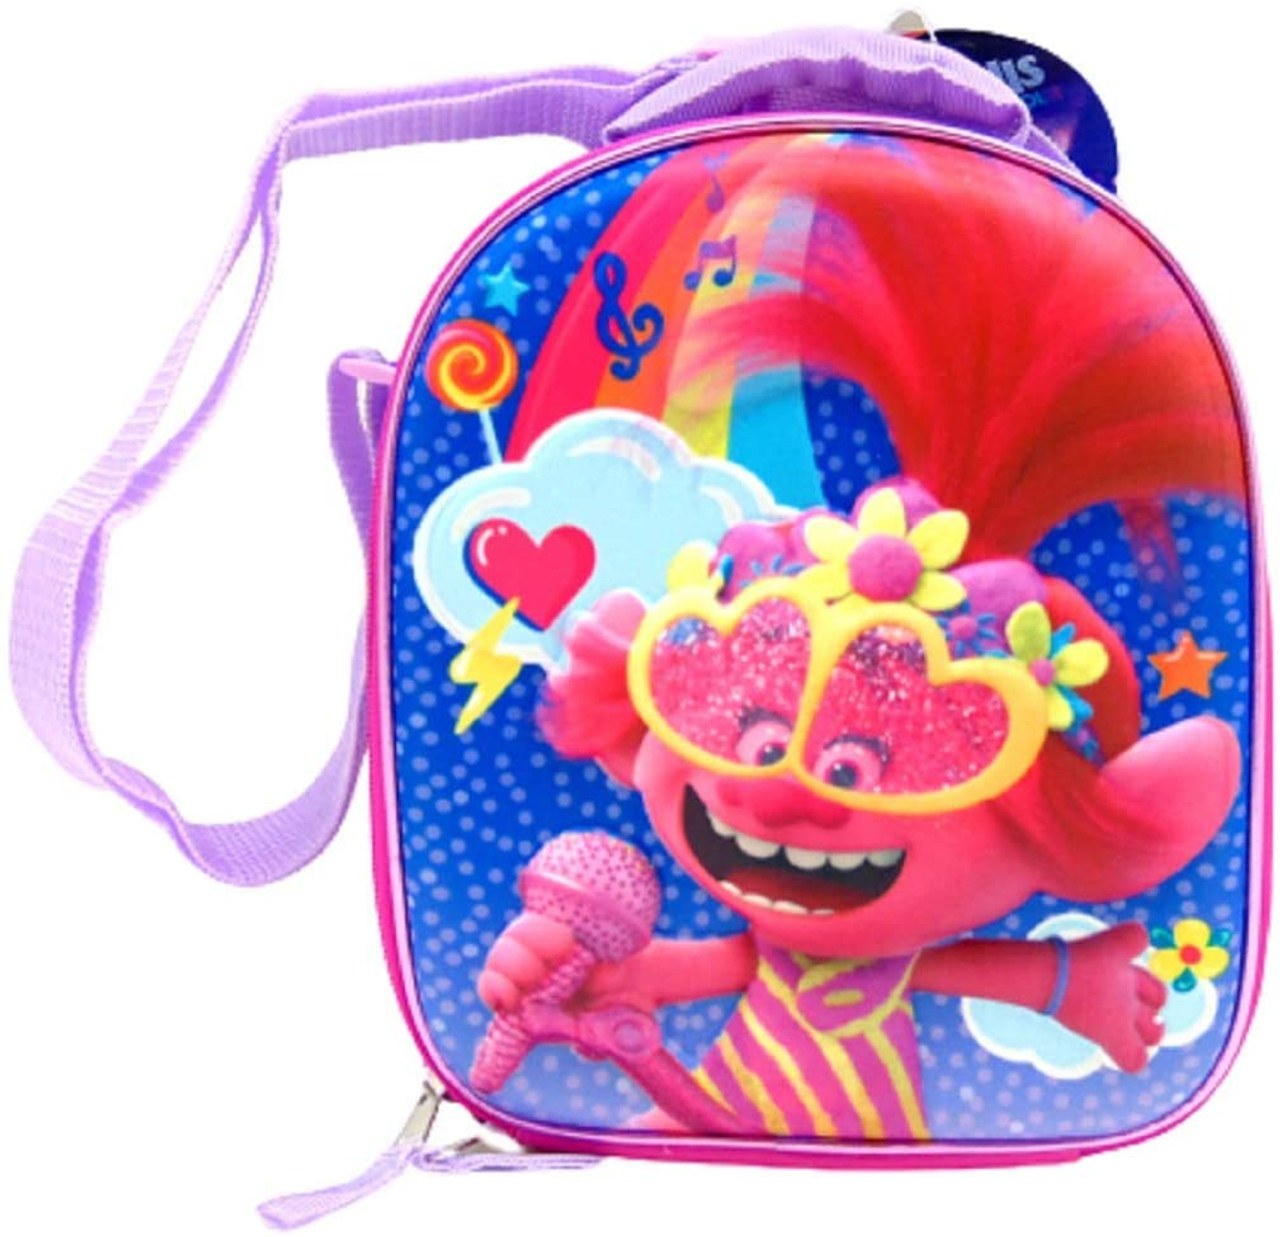 TROLLS PRINCESS POPPY Girls Metal Tin Lunch Box Kids Carry All Toy Gift  Case Bag